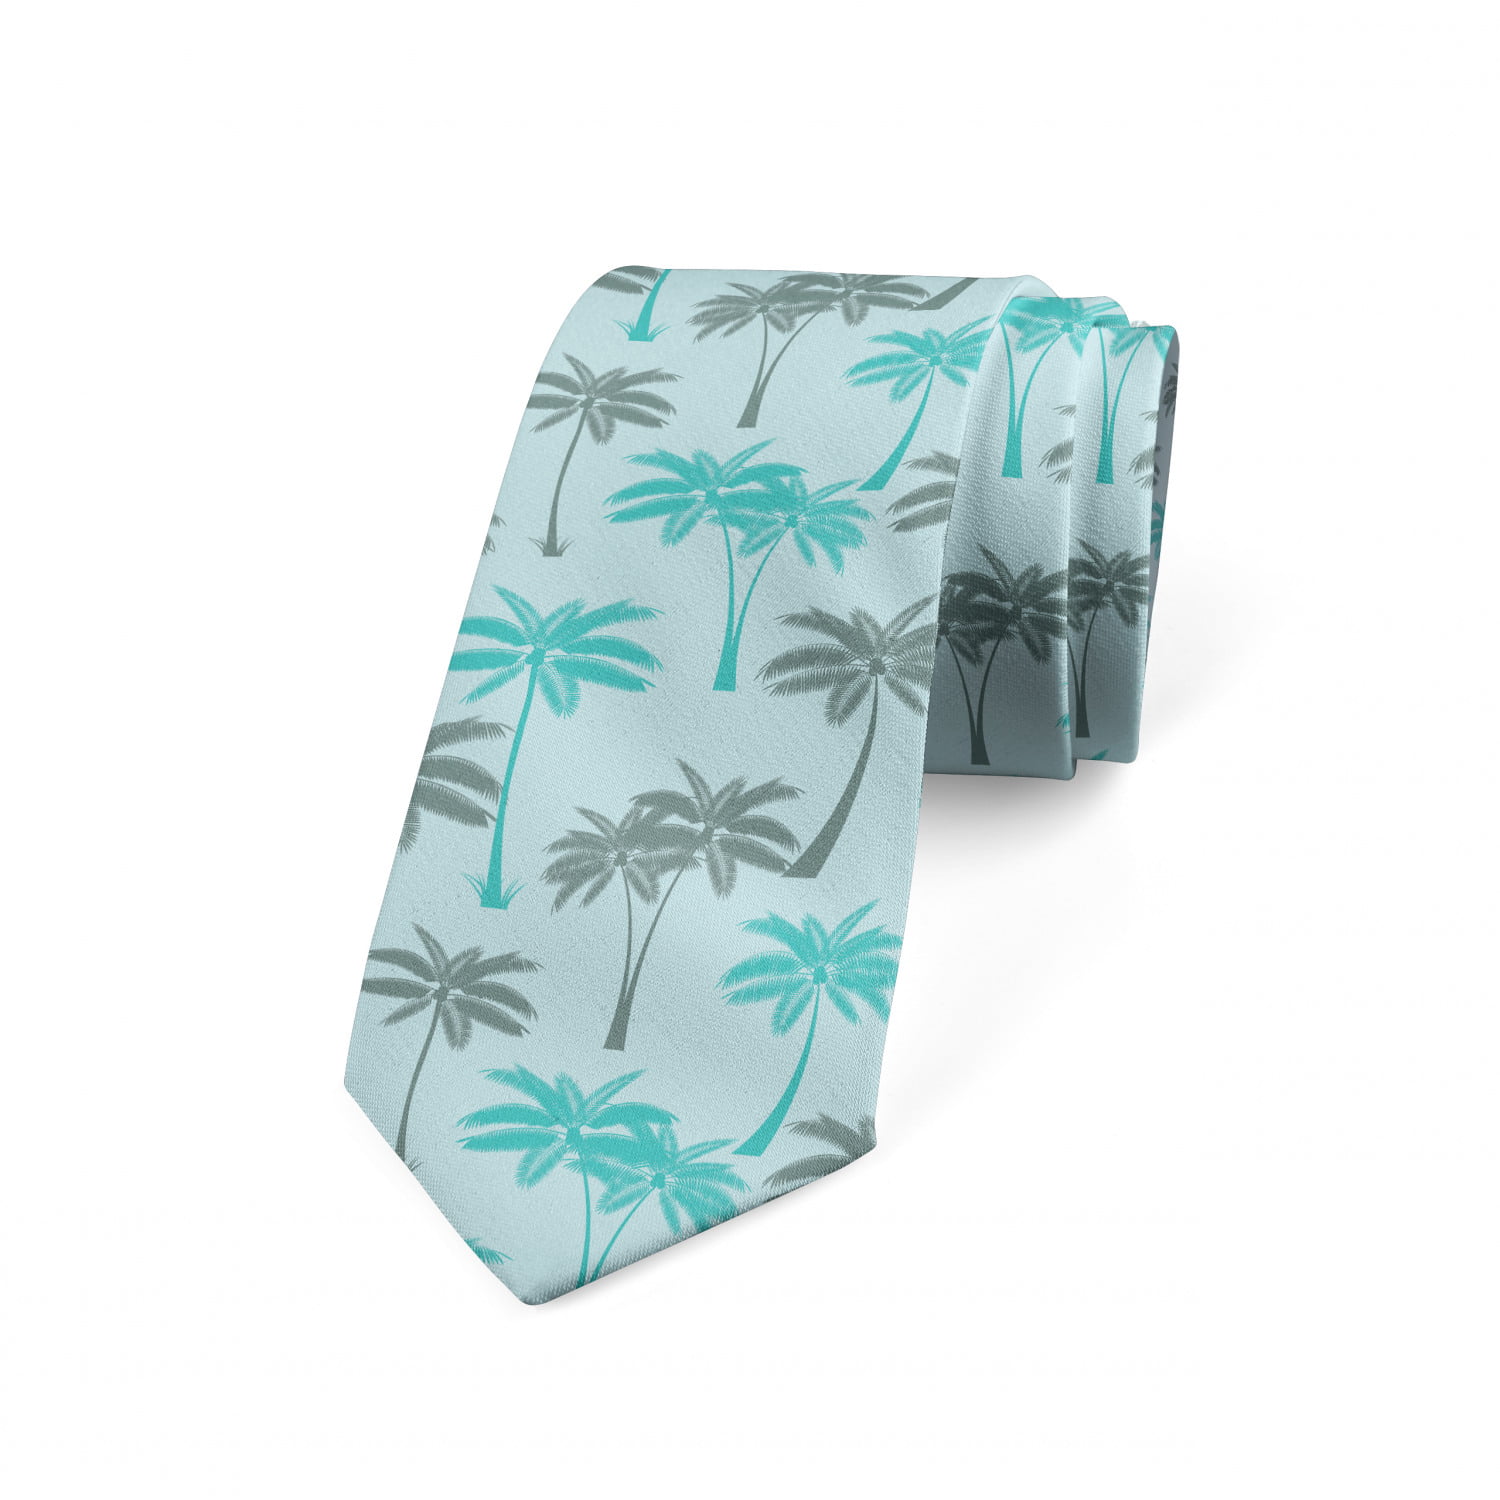 Leaves Necktie, Exotic Palm Trees Motif, Dress Tie, 3.7